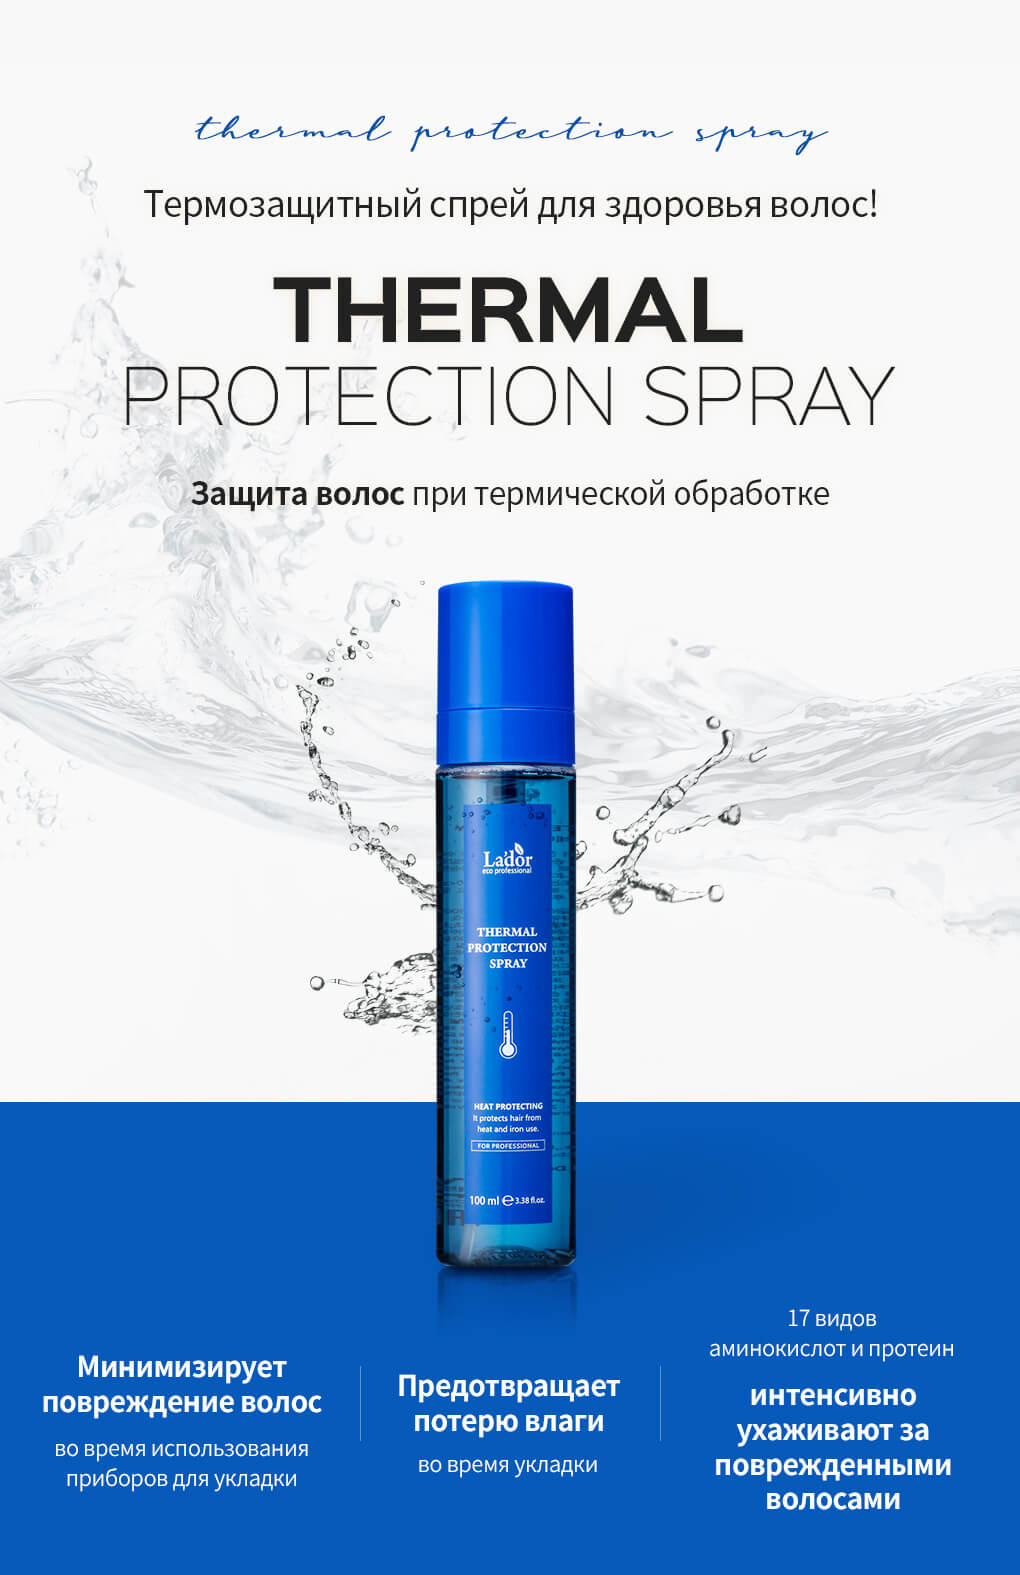 Lador Thermal Protection Spray описание (1)